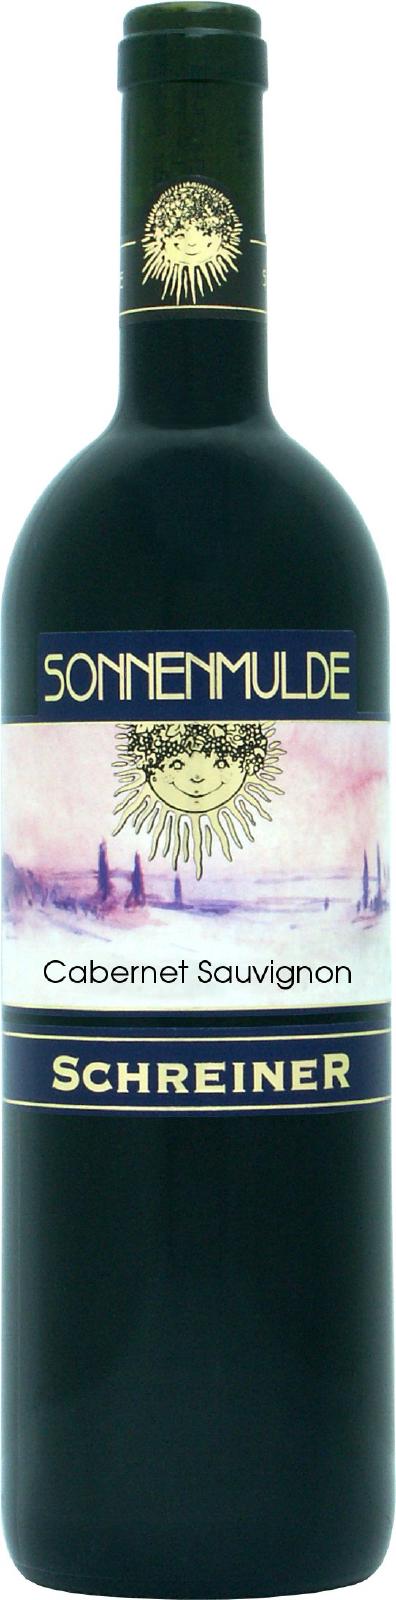 A bottle of Cabernet Sauvignon